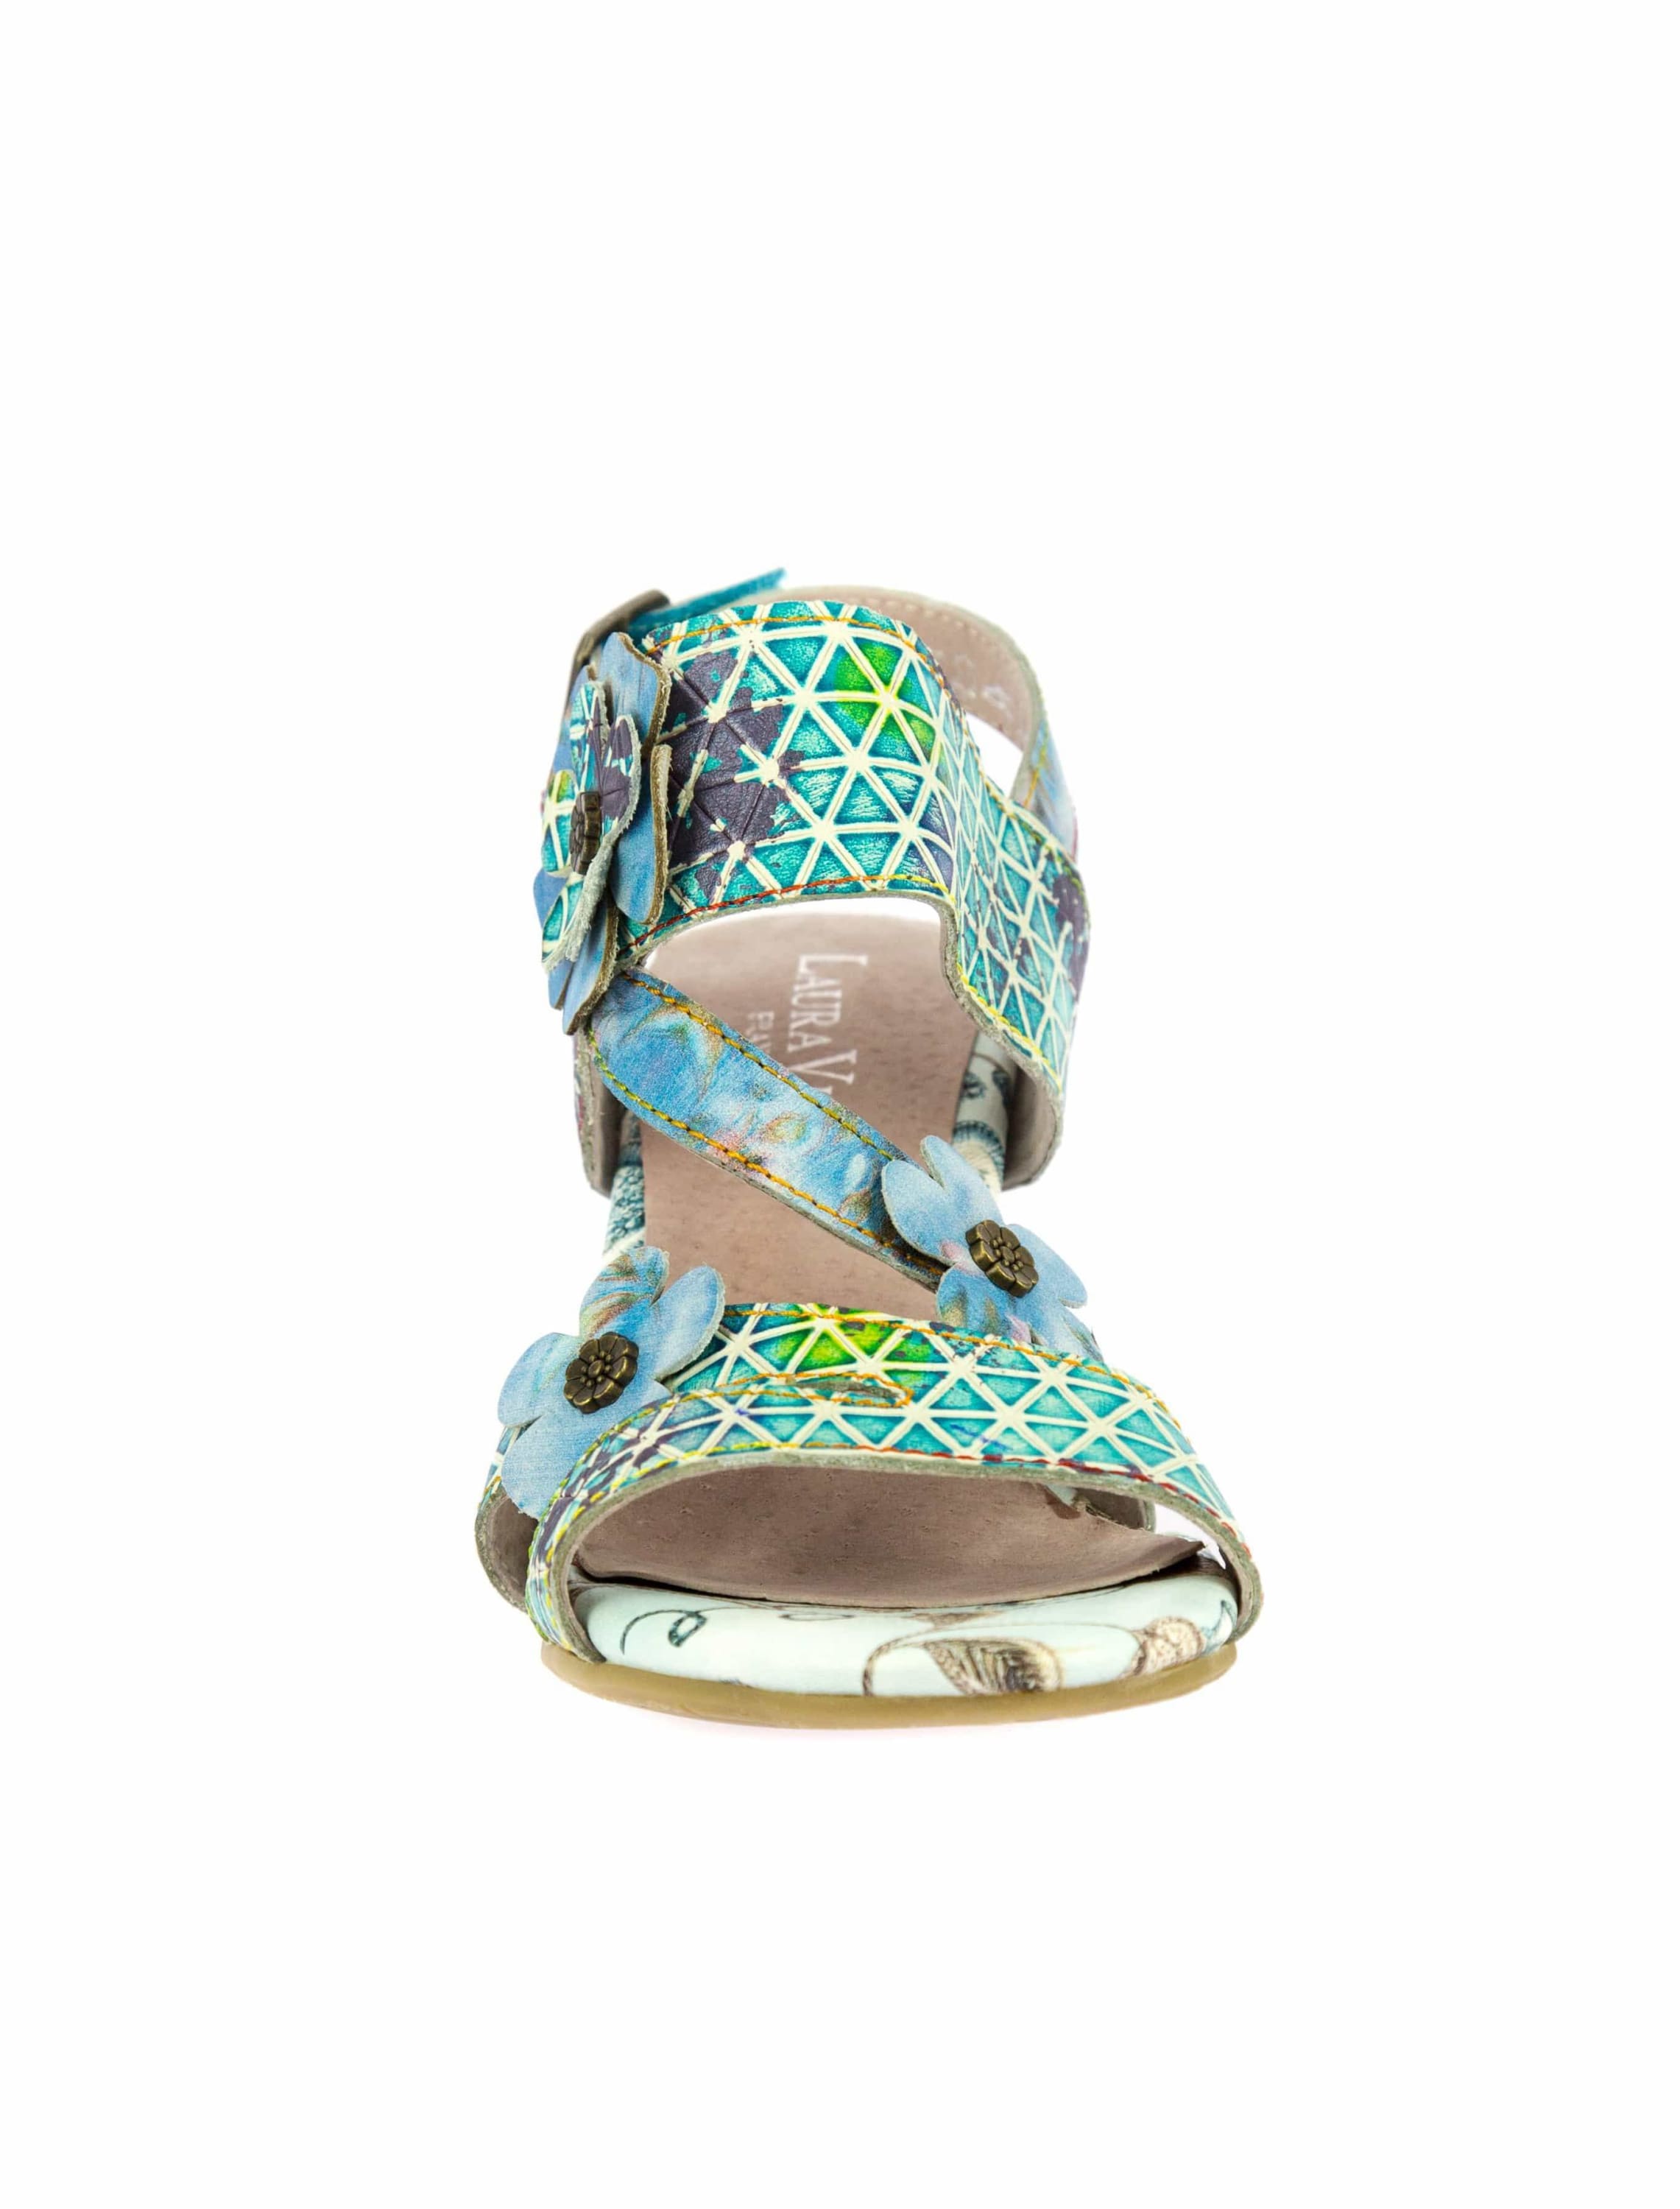 Chaussure FACNNYO02 - Sandale